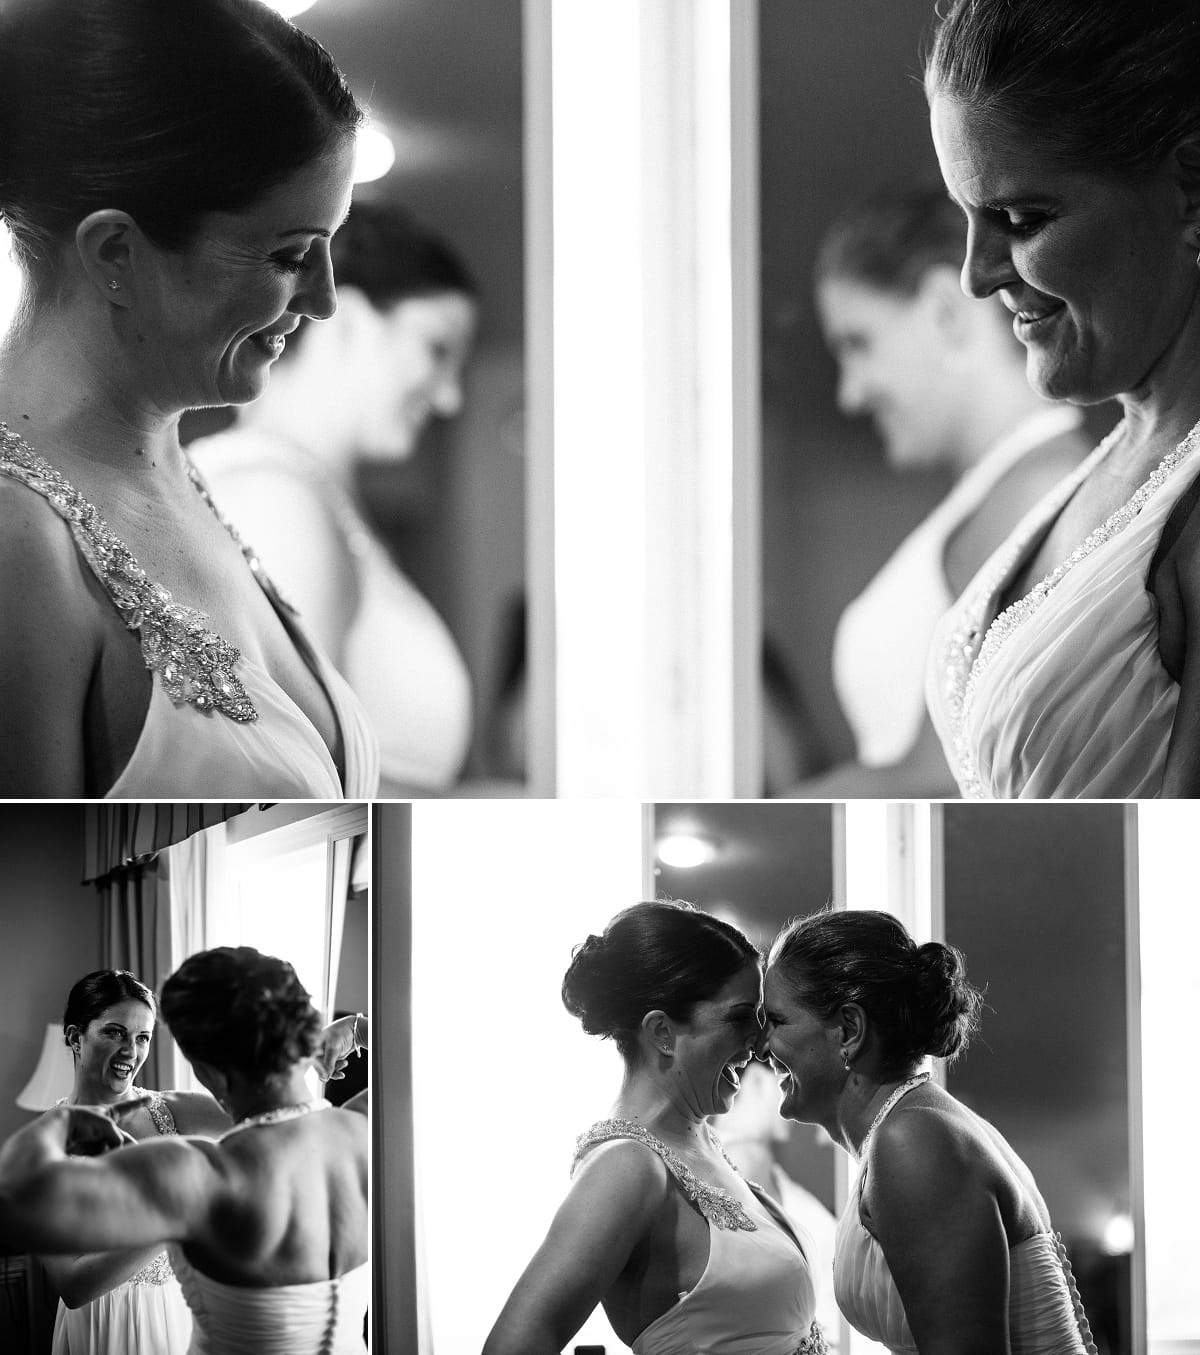 Beth and Gina Shakopee Wedding Photography 5